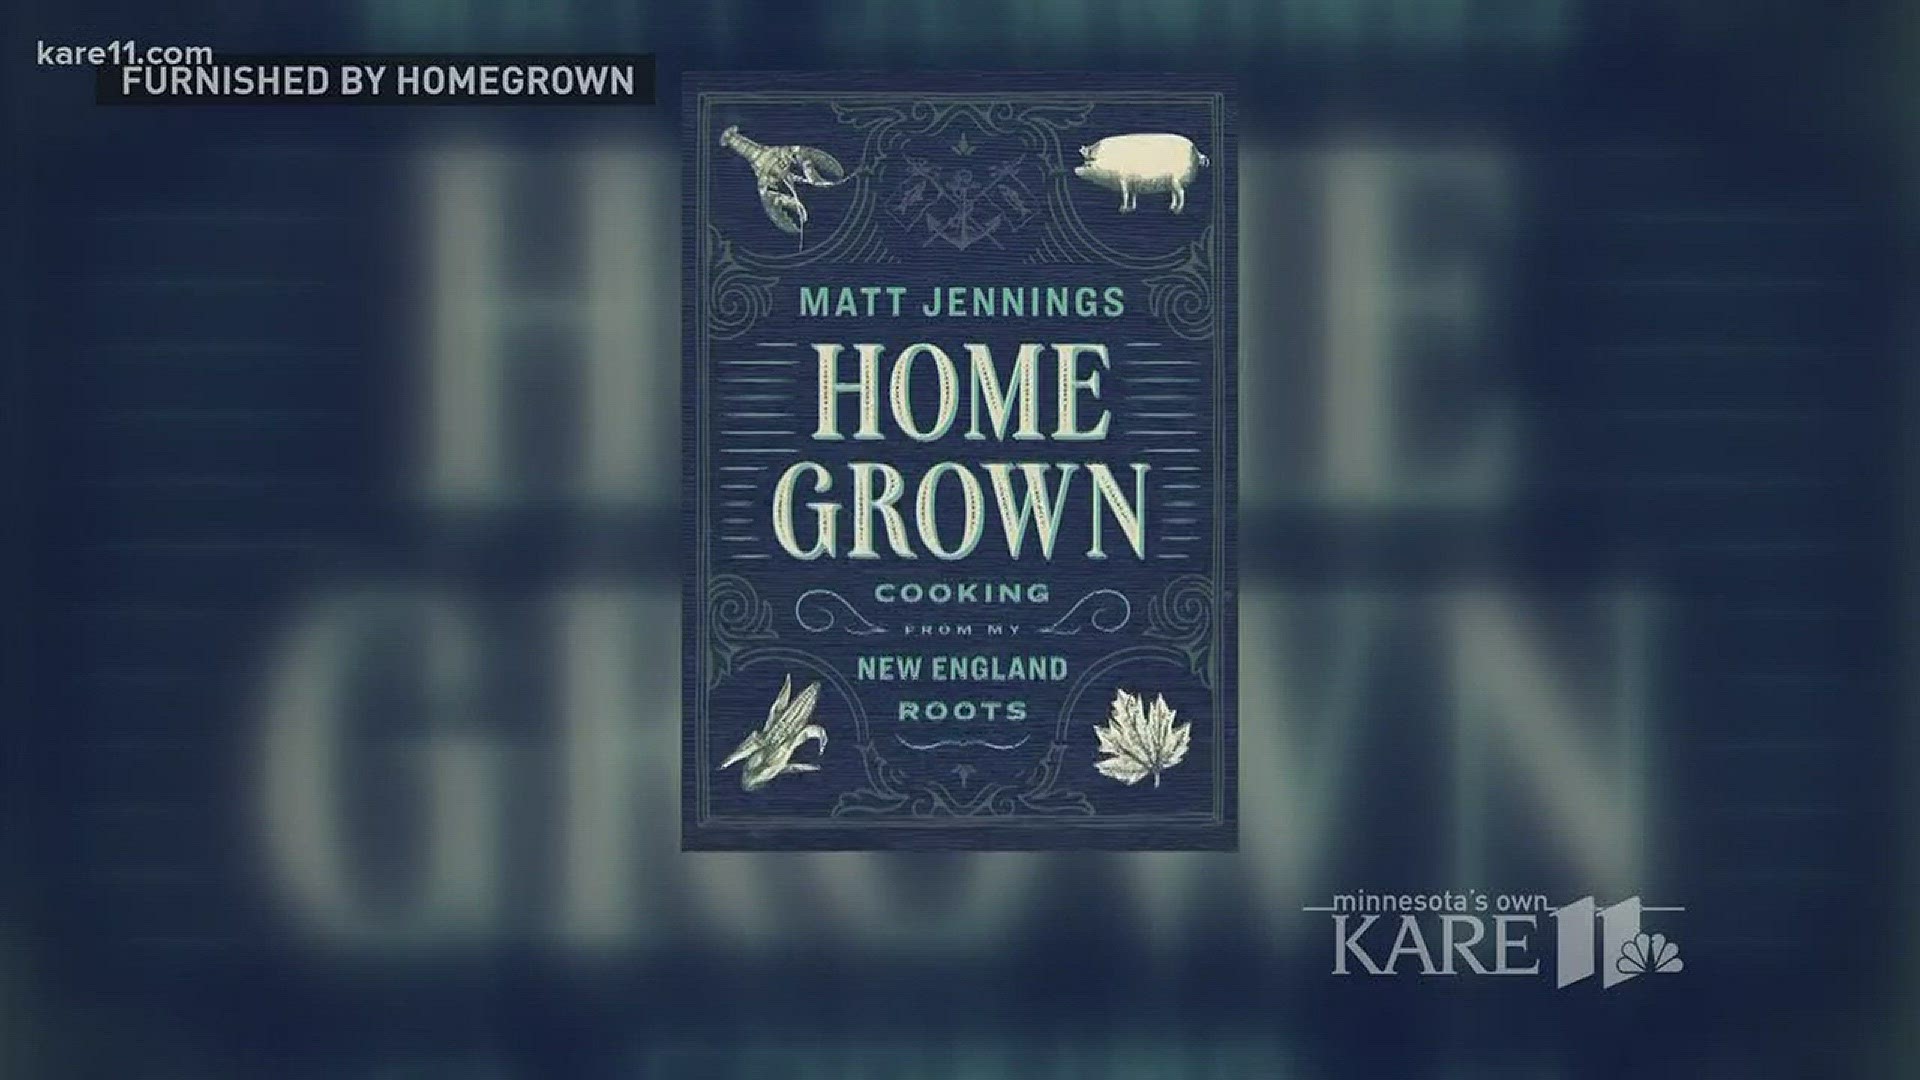 Author of "Homegrown," Matt Jennings, shows KARE his Evie's Pub Cheese recipe.